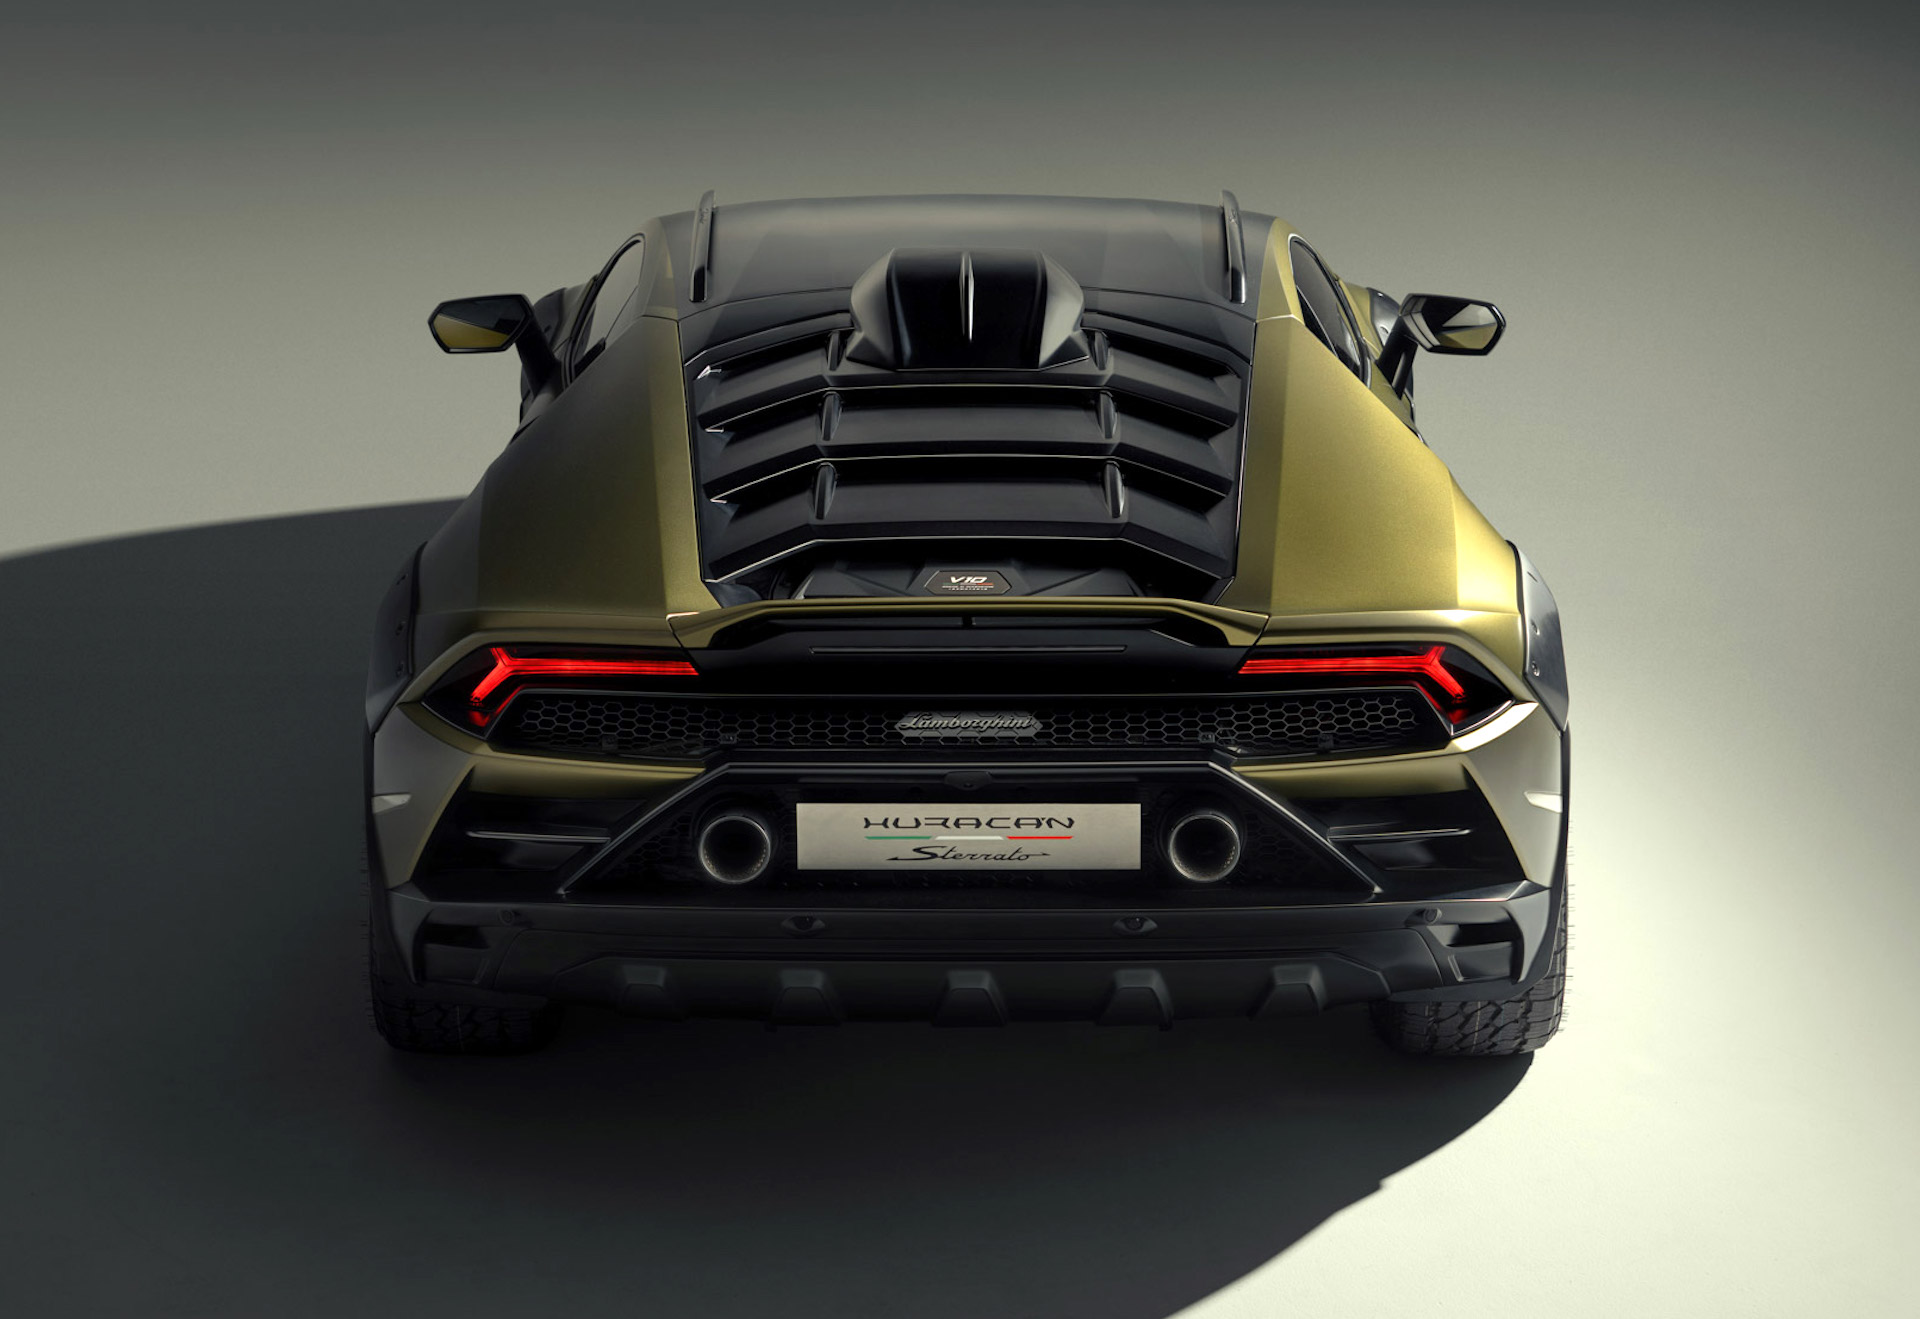 Lamborghini Huracan STO Revealed As $328,000 Race Car For The Road